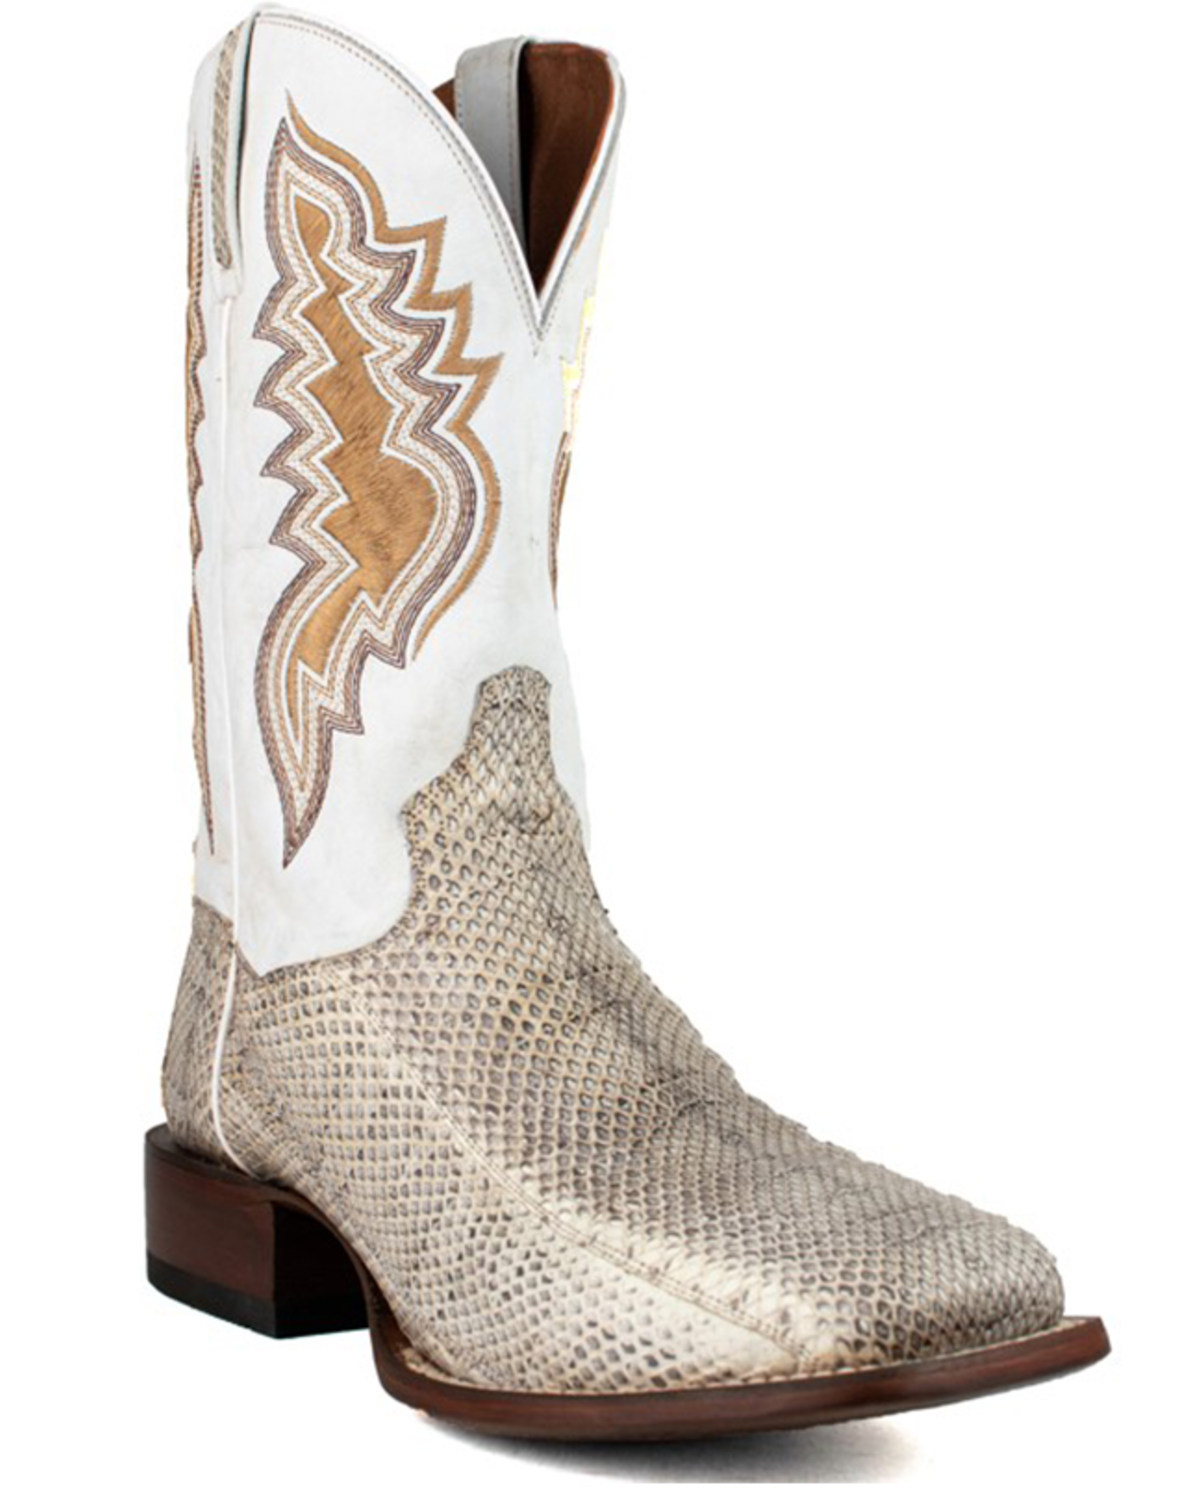 Dan Post Men's Exotic Water Snake Western Boots - Broad Square Toe